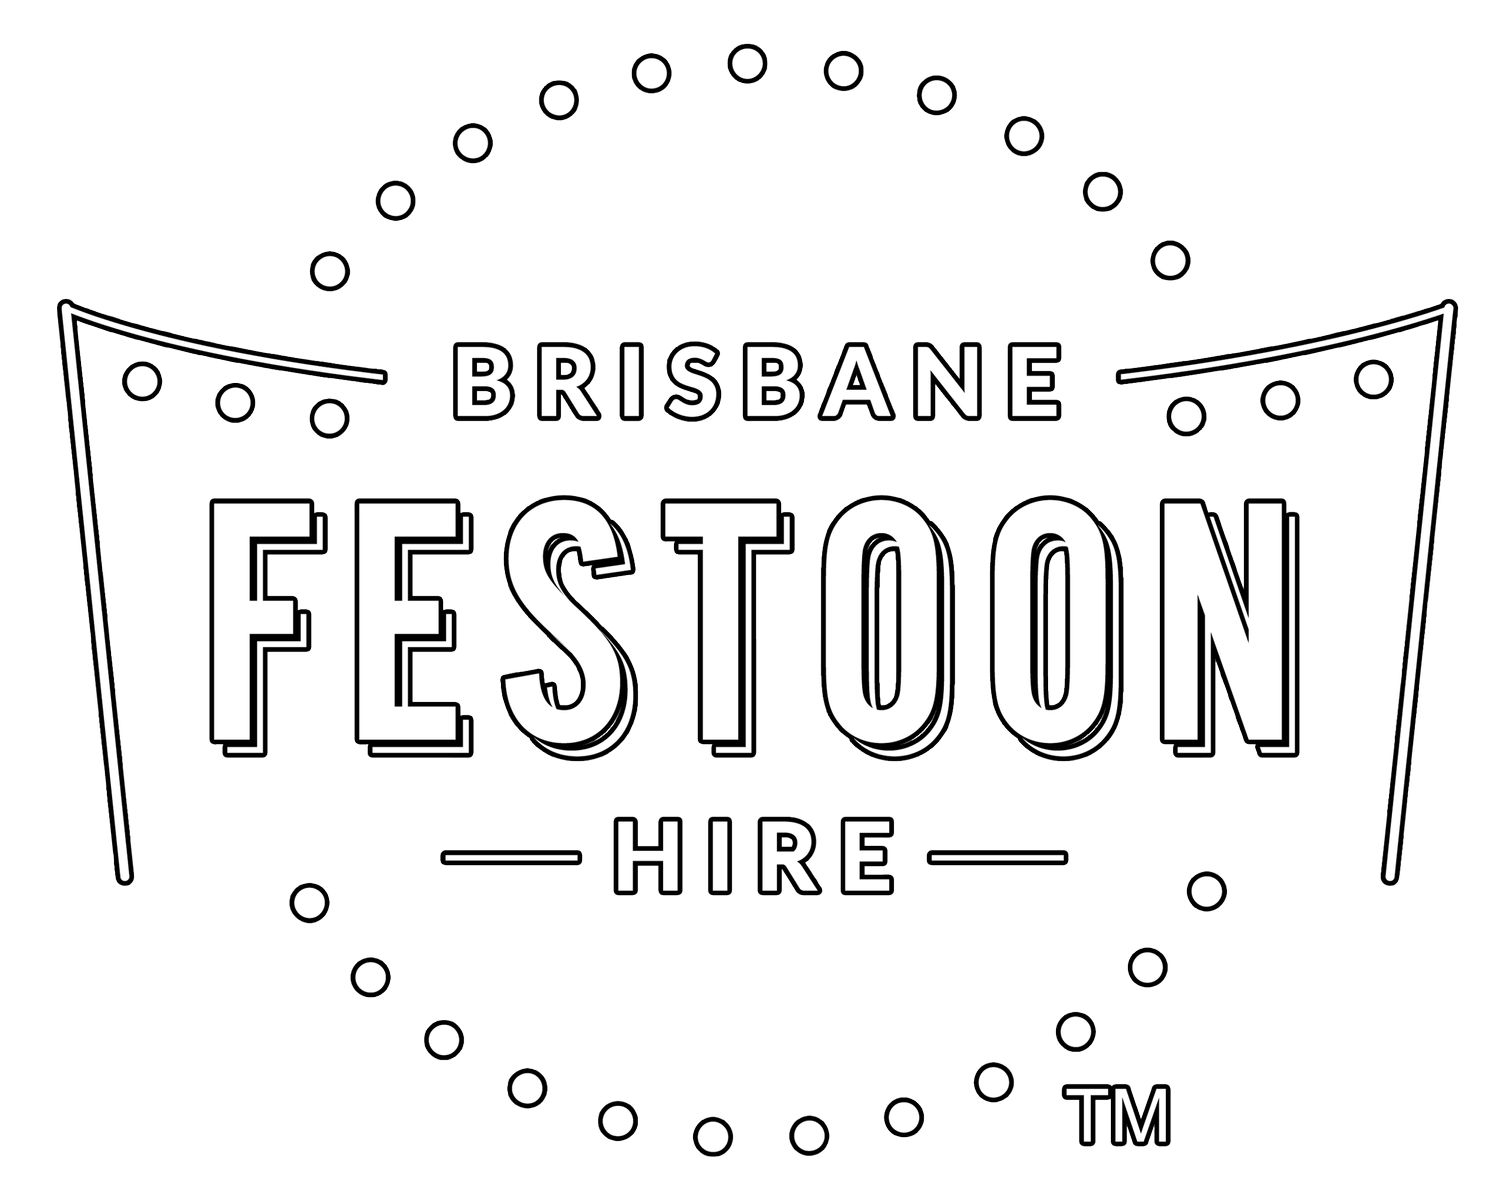 Brisbane Festoon Hire